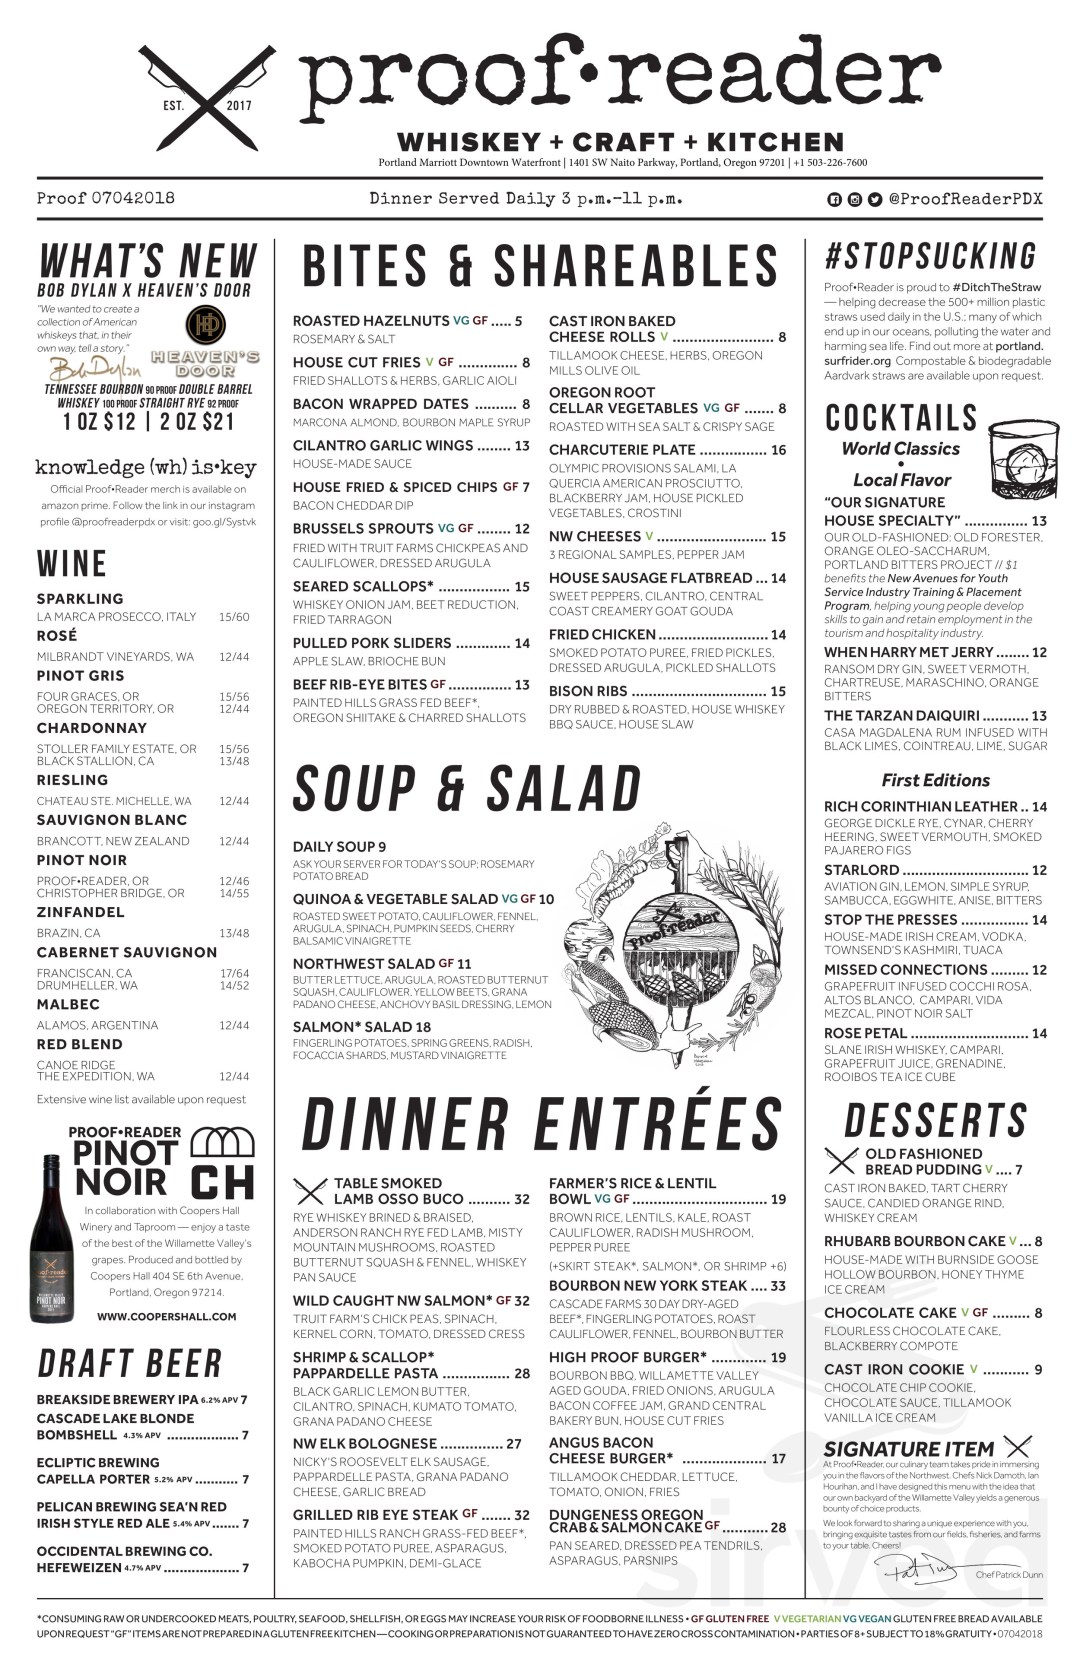 Picture of: Proof•Reader Restaurant & Bar menu in Portland, Oregon, USA